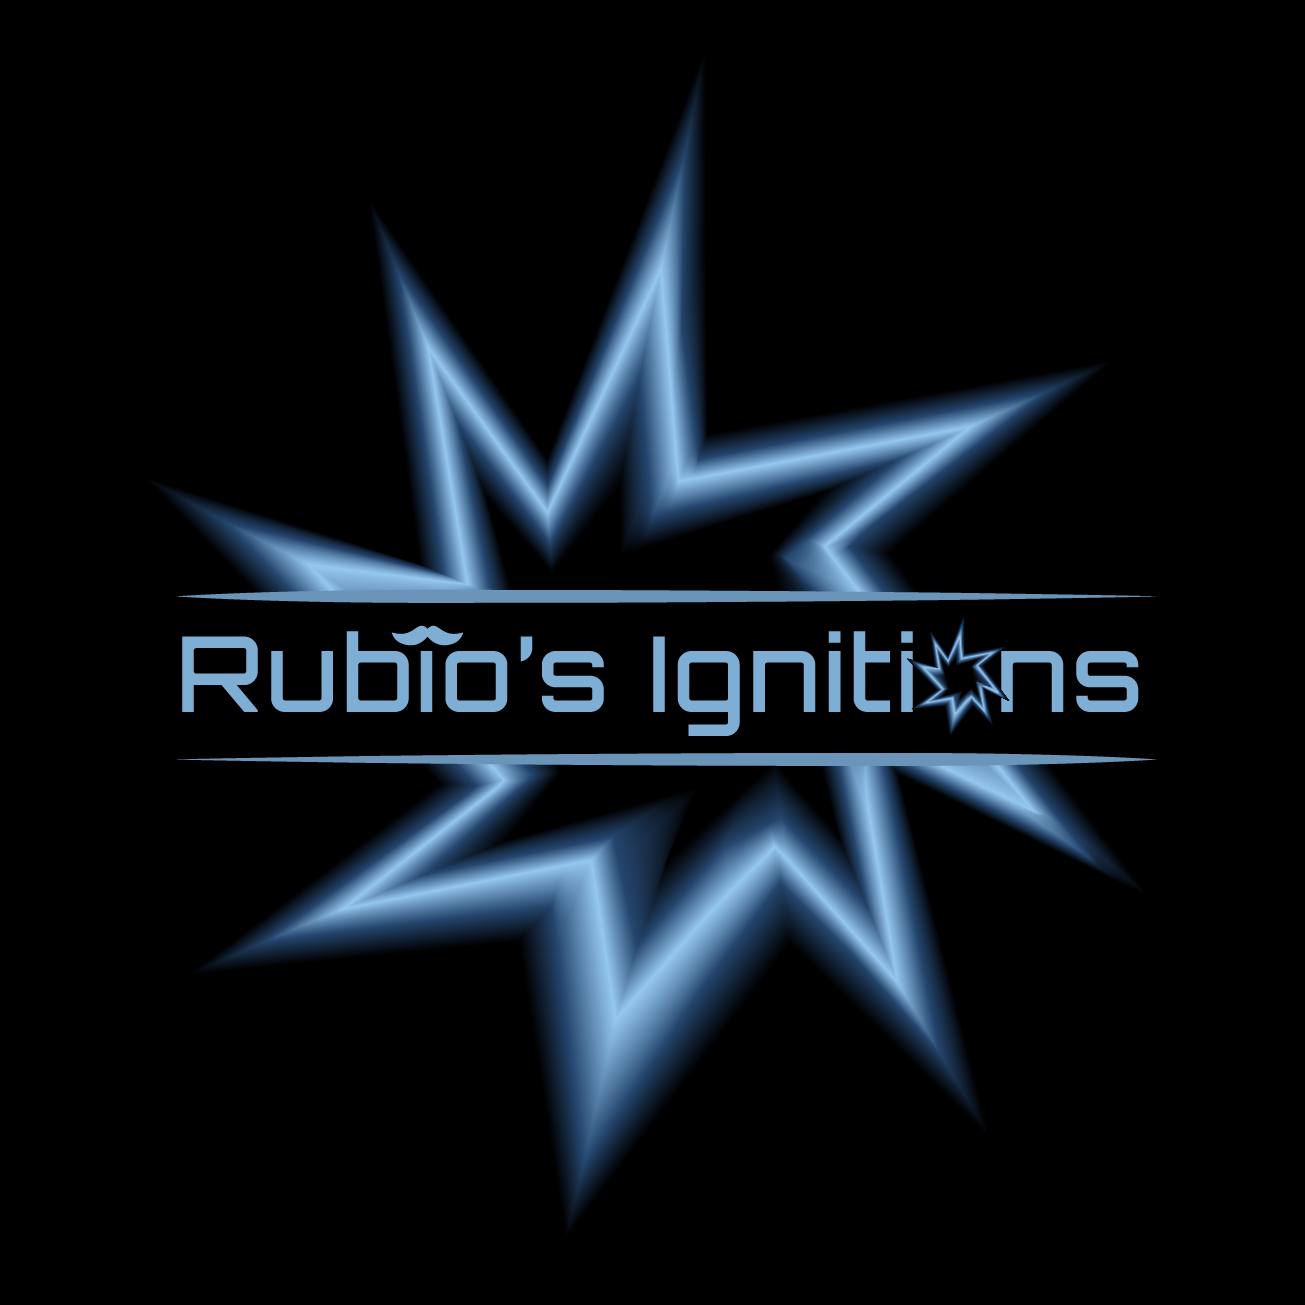 Rubio's Ignitions